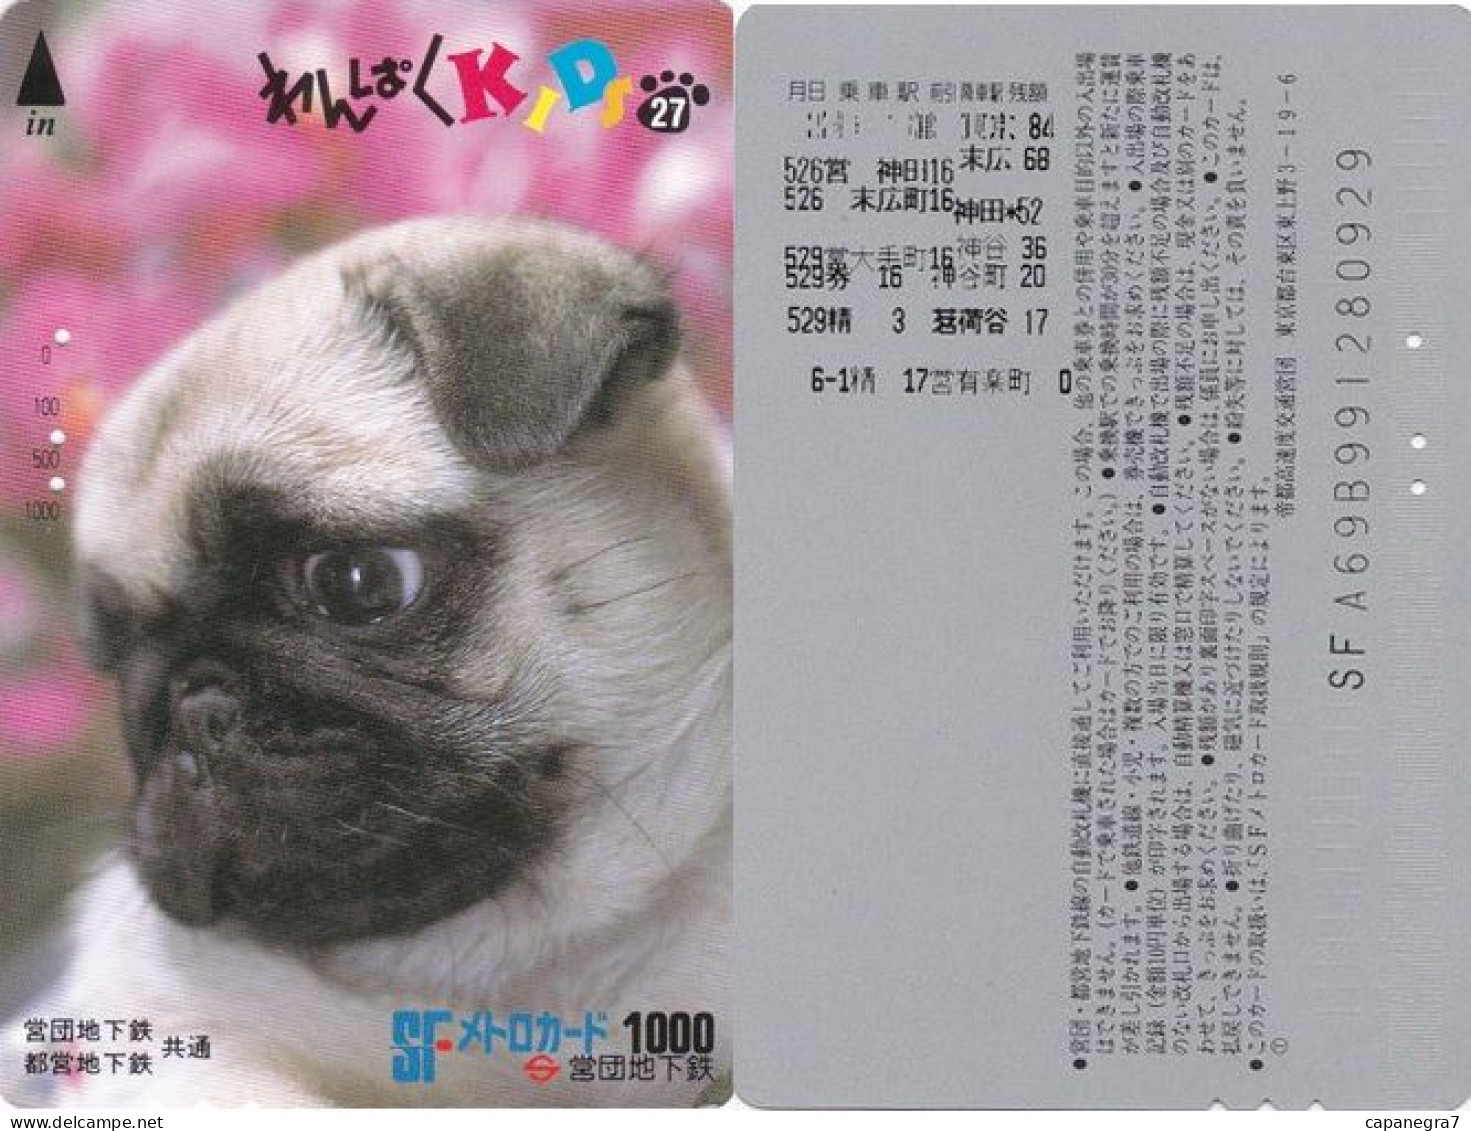 Hund, Transport Ticket, SF Card, Japan - Japan